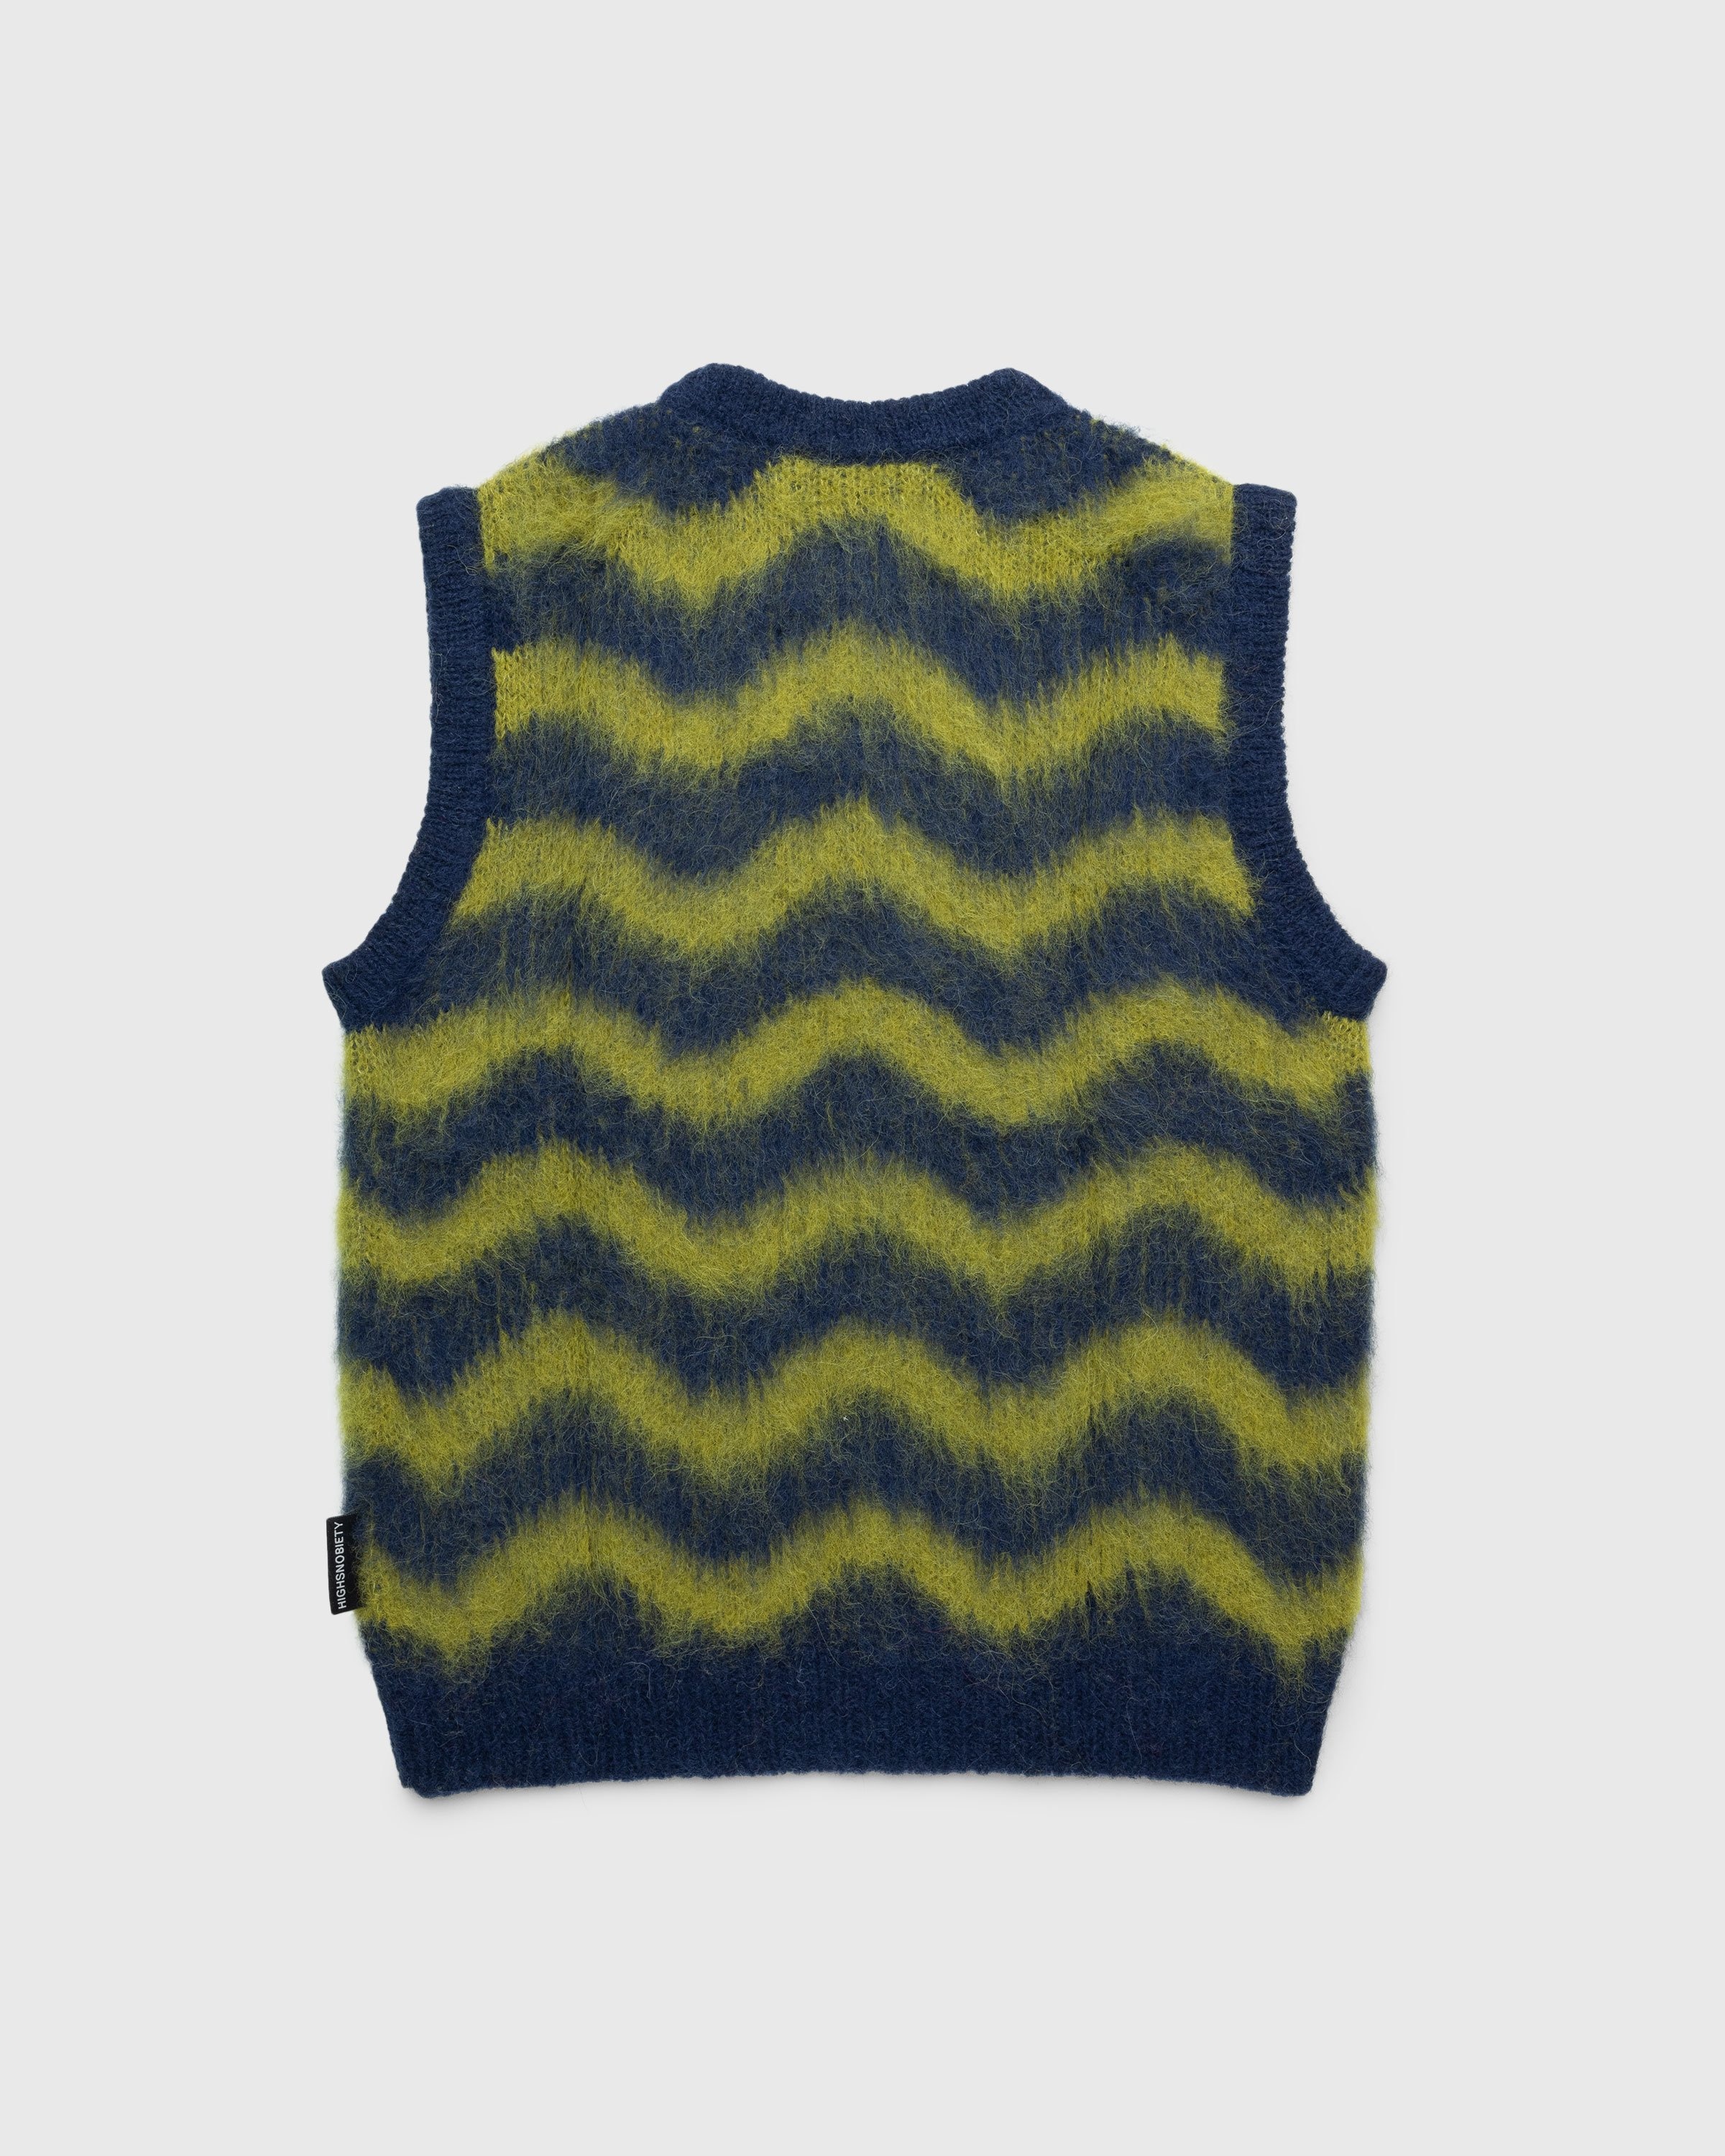 Highsnobiety HS05 – Alpaca Fuzzy Wave Sweater Vest Navy/Olive green - Knitwear - Multi - Image 2